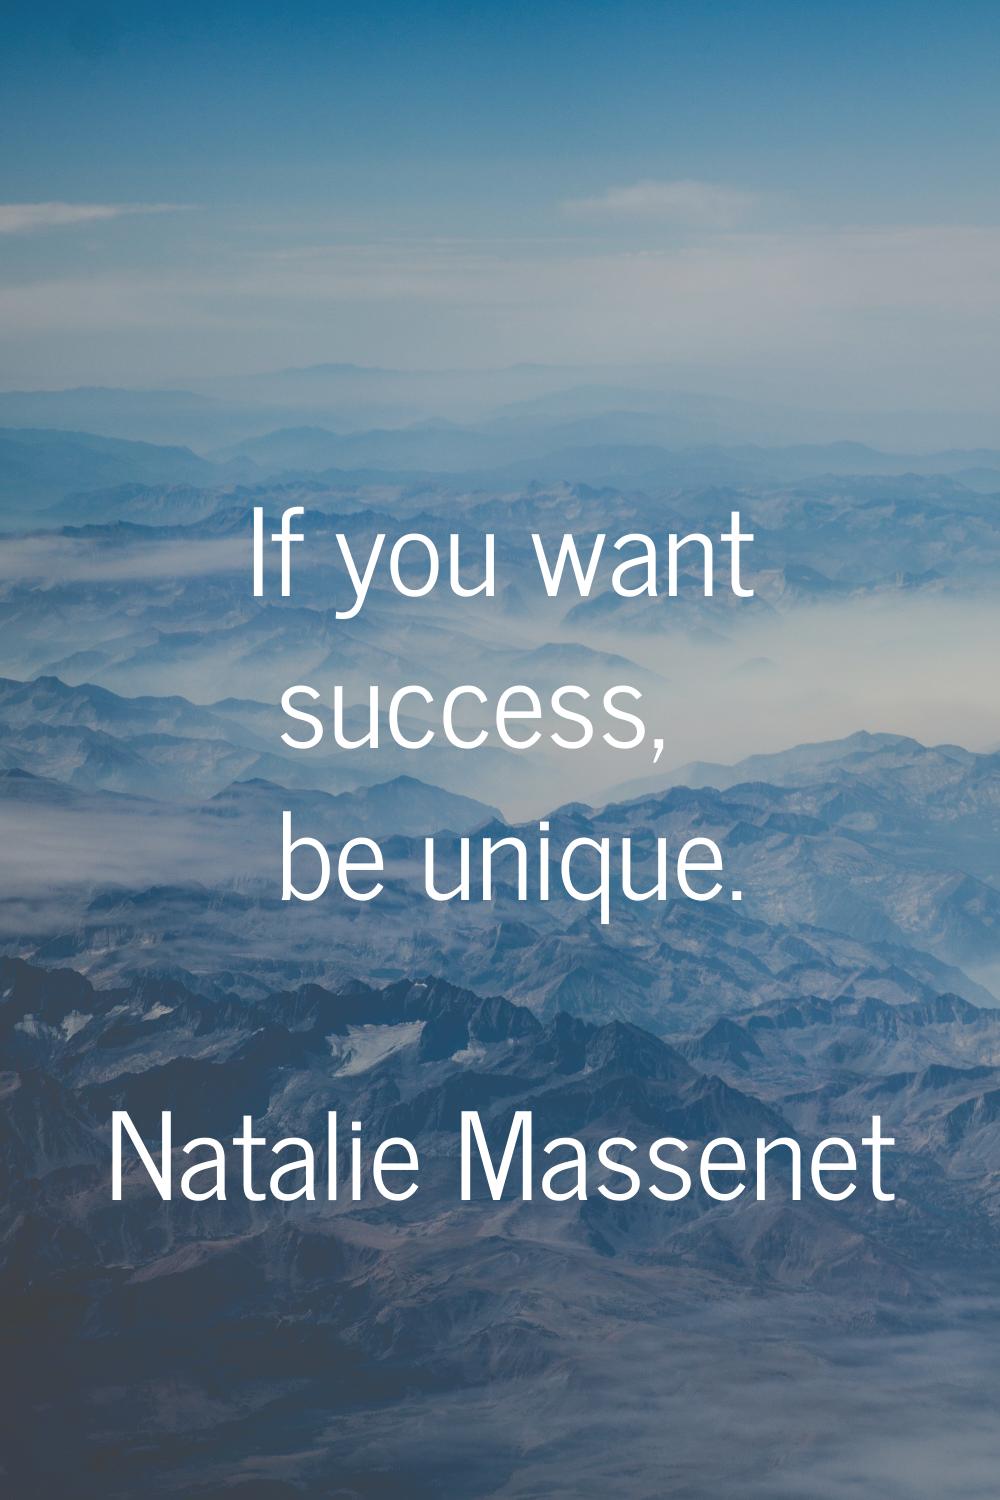 If you want success, be unique.